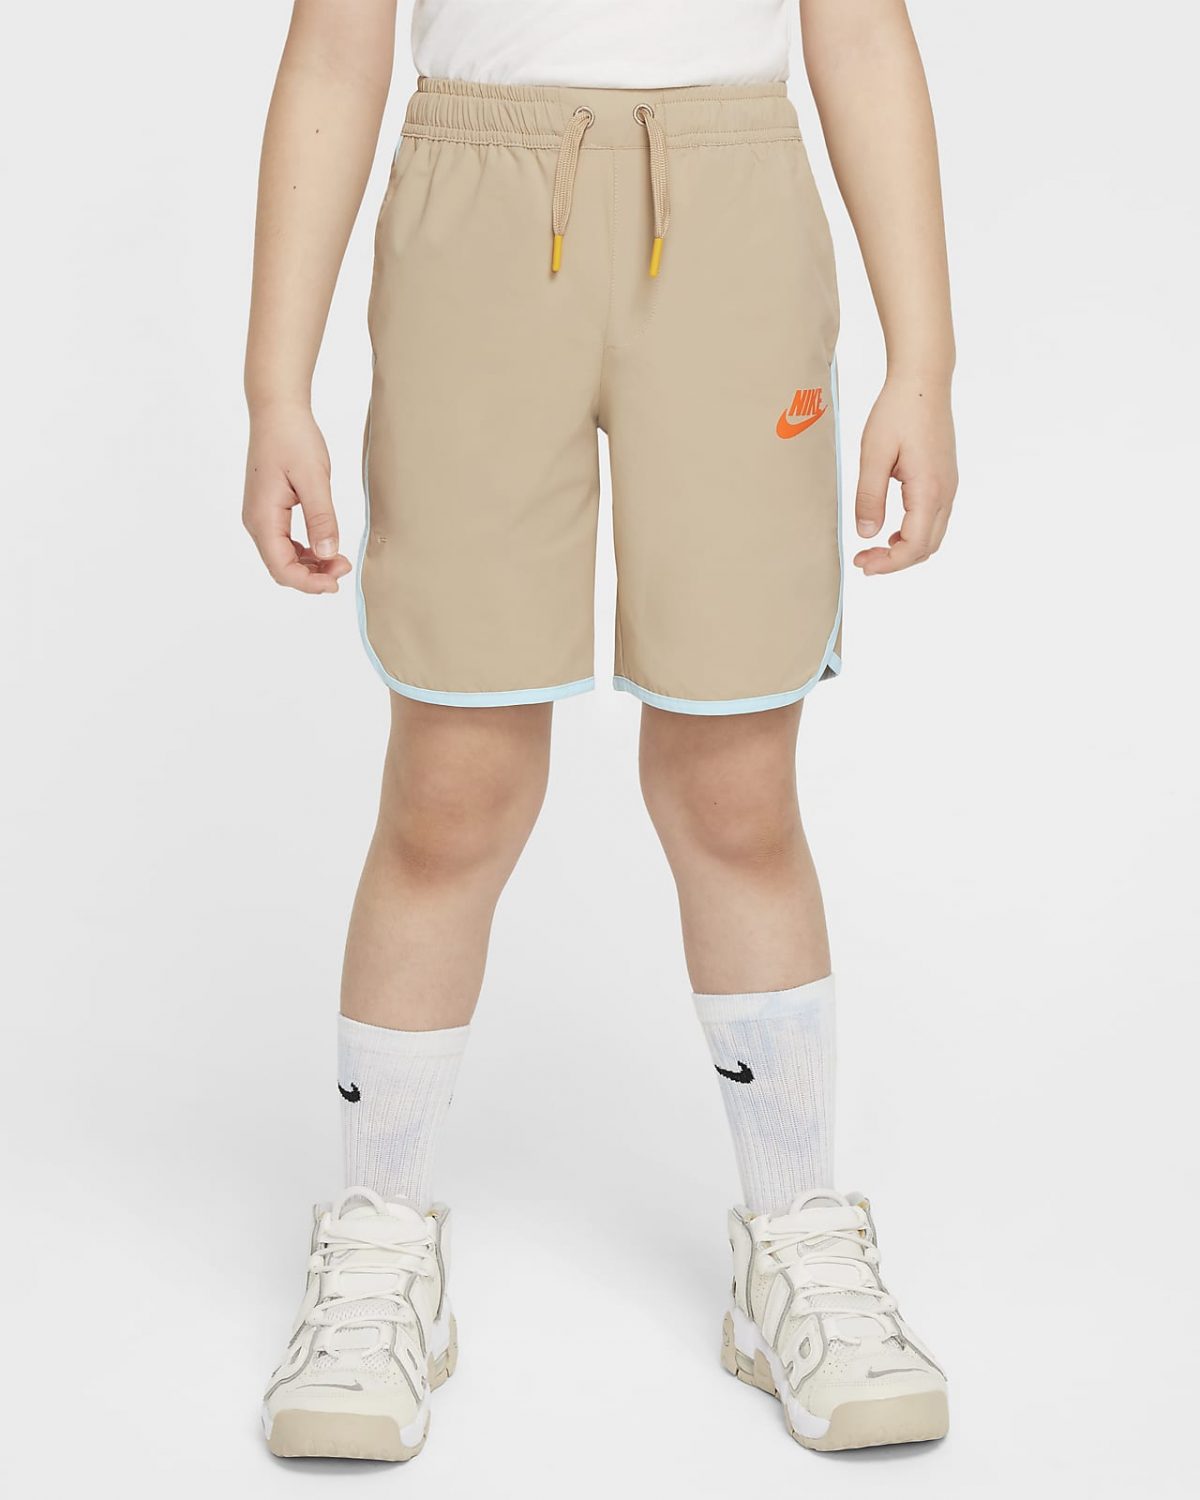 Детские шорты Nike Sportswear Create Your Own Adventure желтые фото